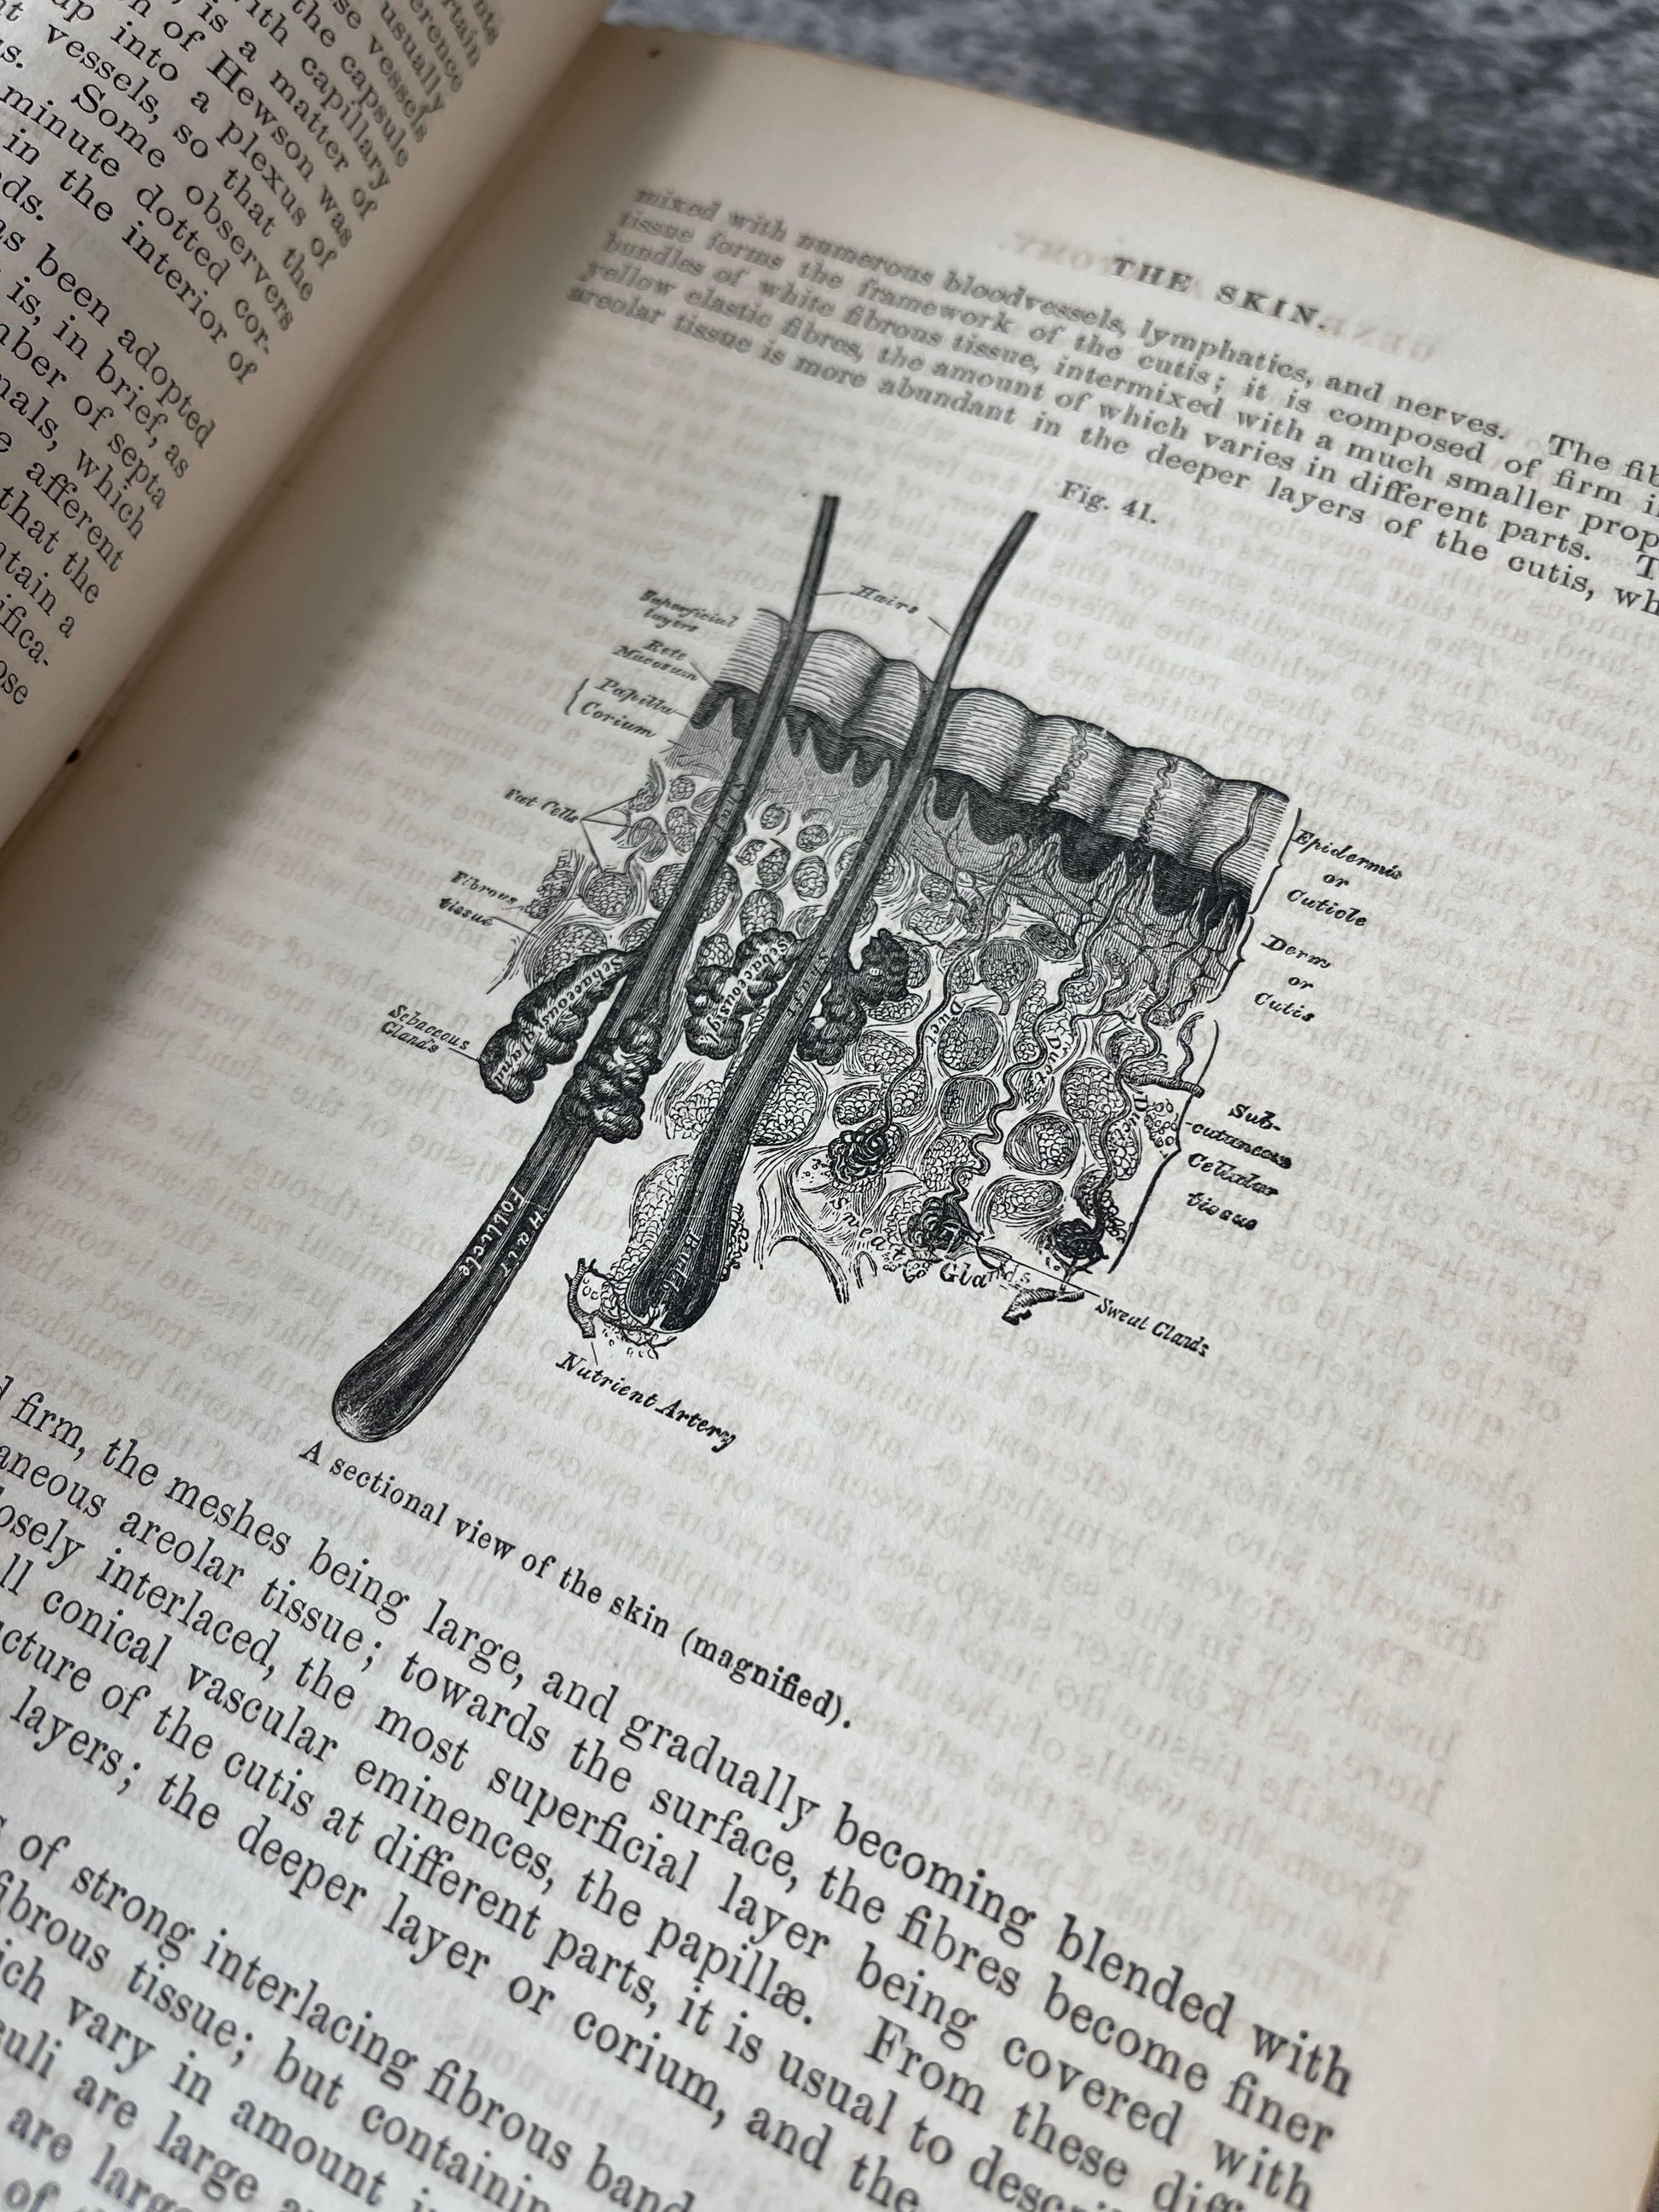 Gray's Anatomy Descriptive and Surgical / Fifth Edition / 1870 - Precious Cache